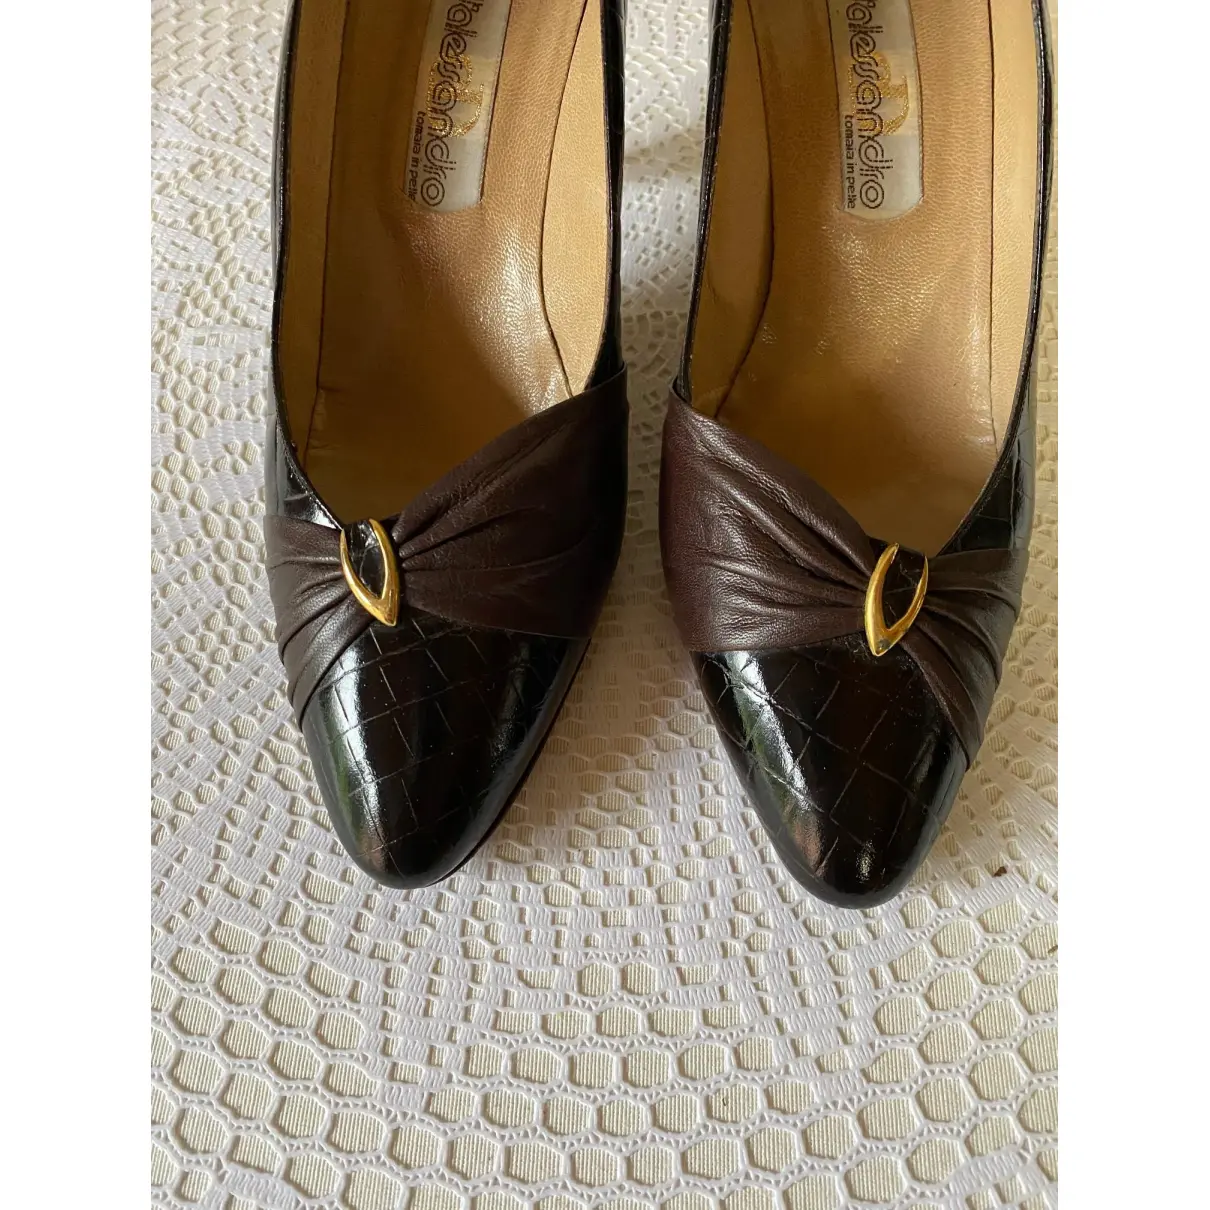 Buy Alessandro Dell'Acqua Leather heels online